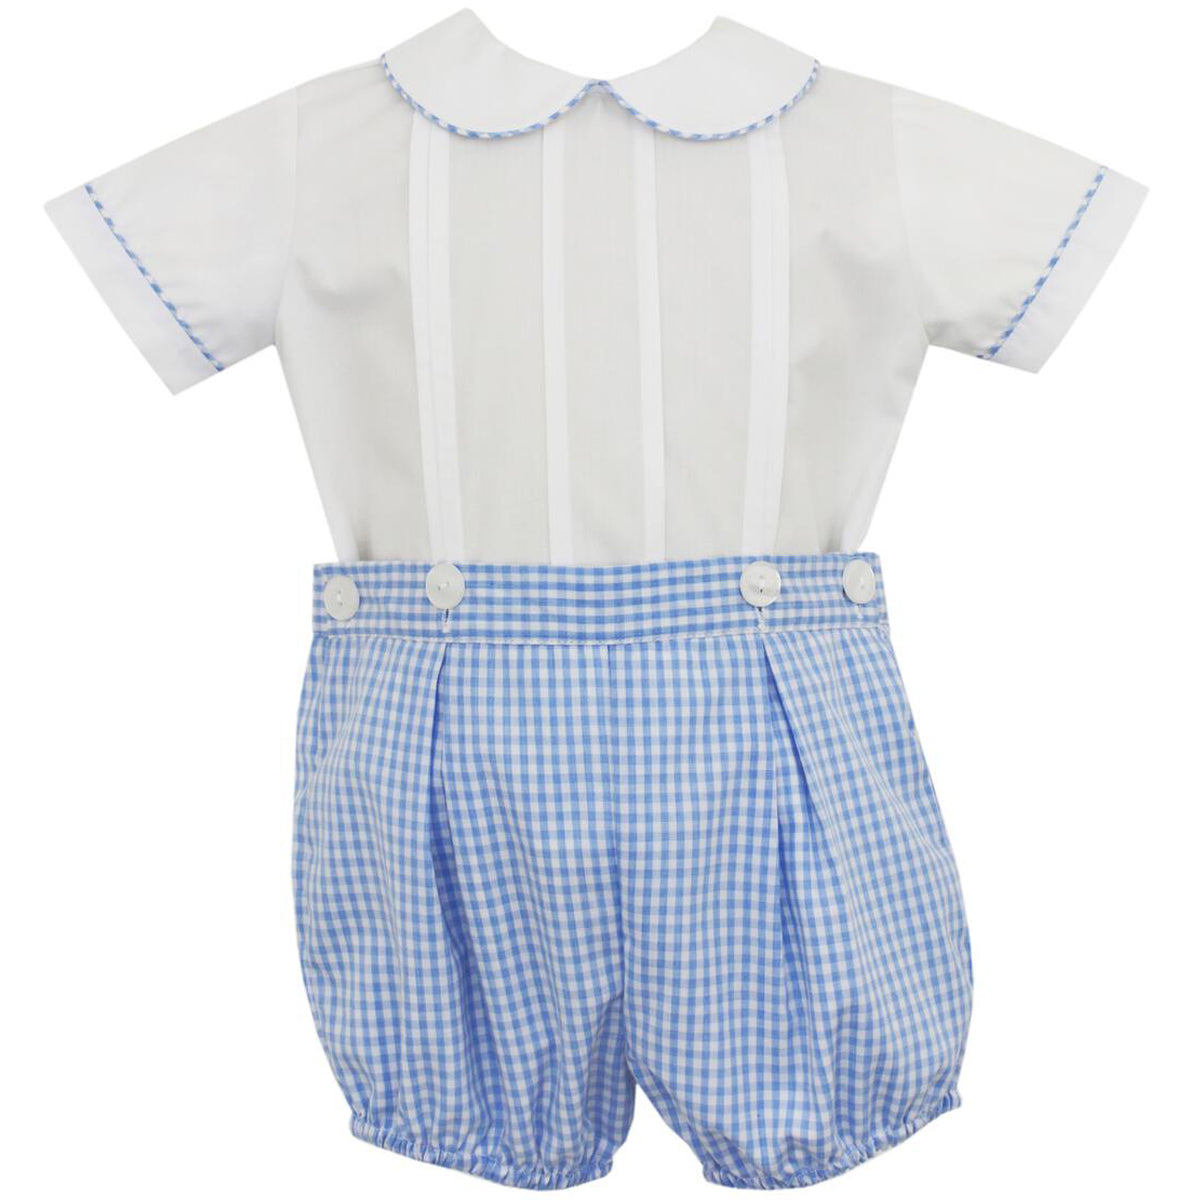 Blue Gingham Short Set W/ White Shirt